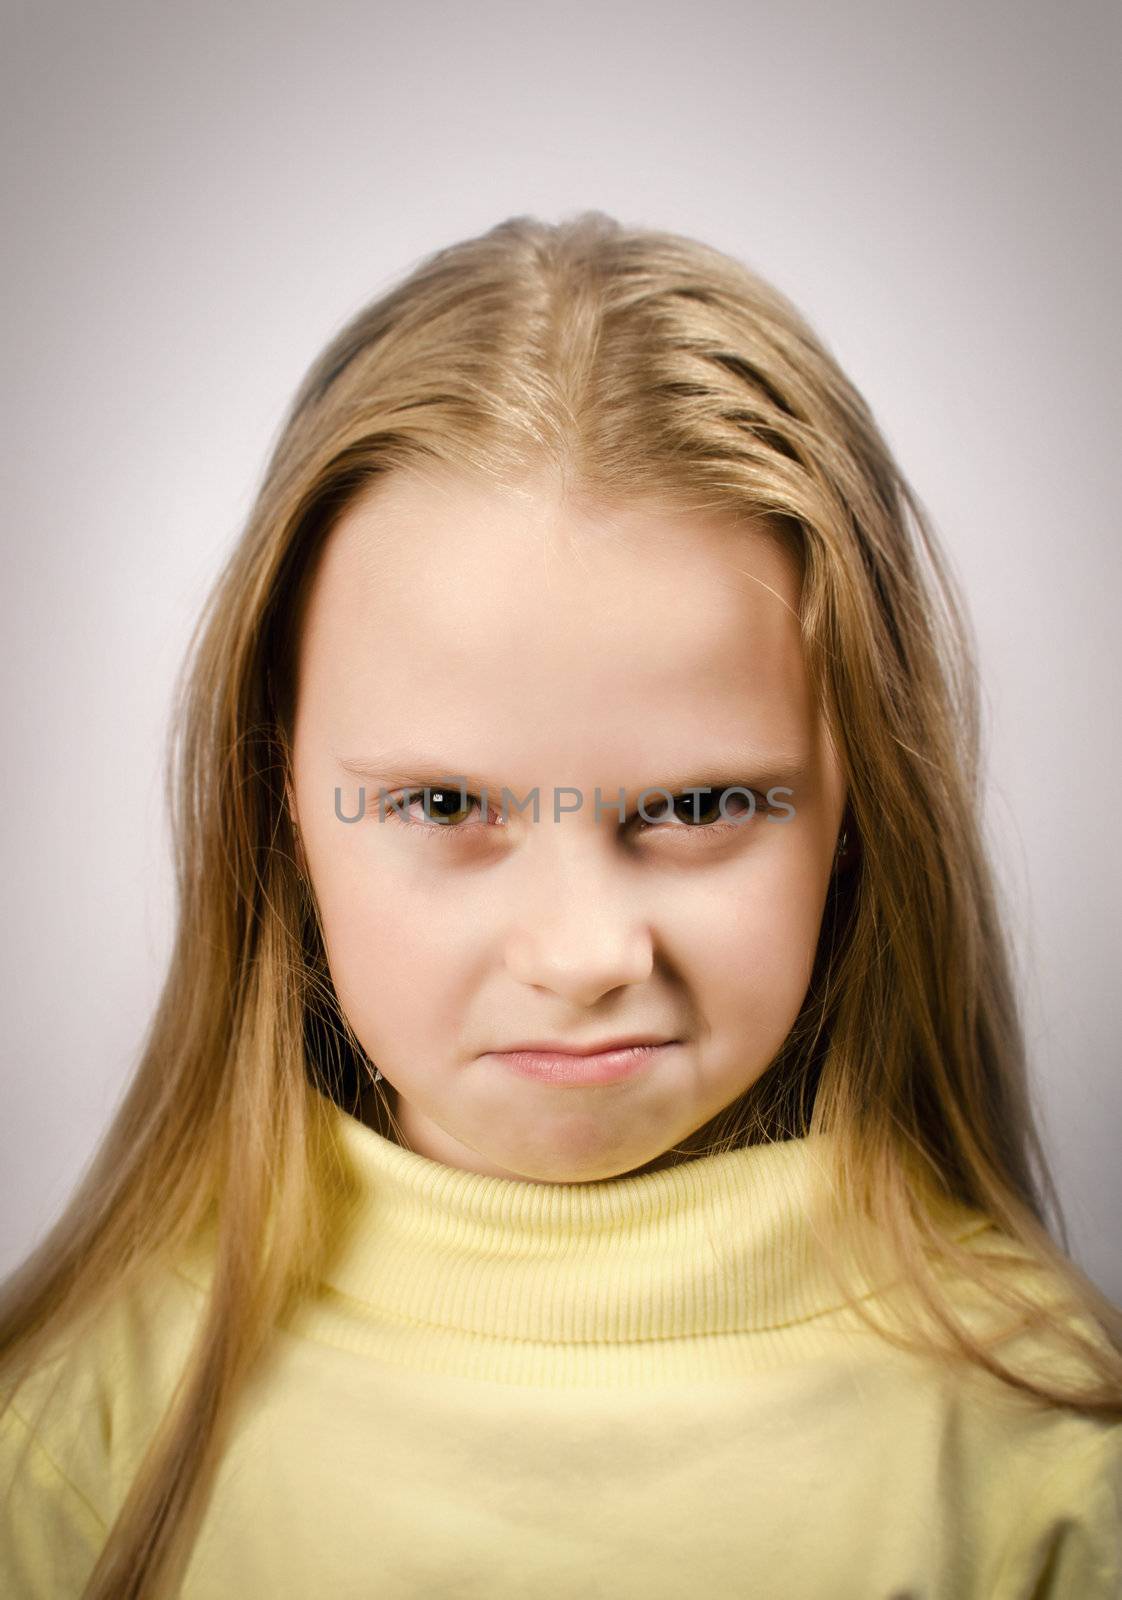 Grumpy little girl with an attitude